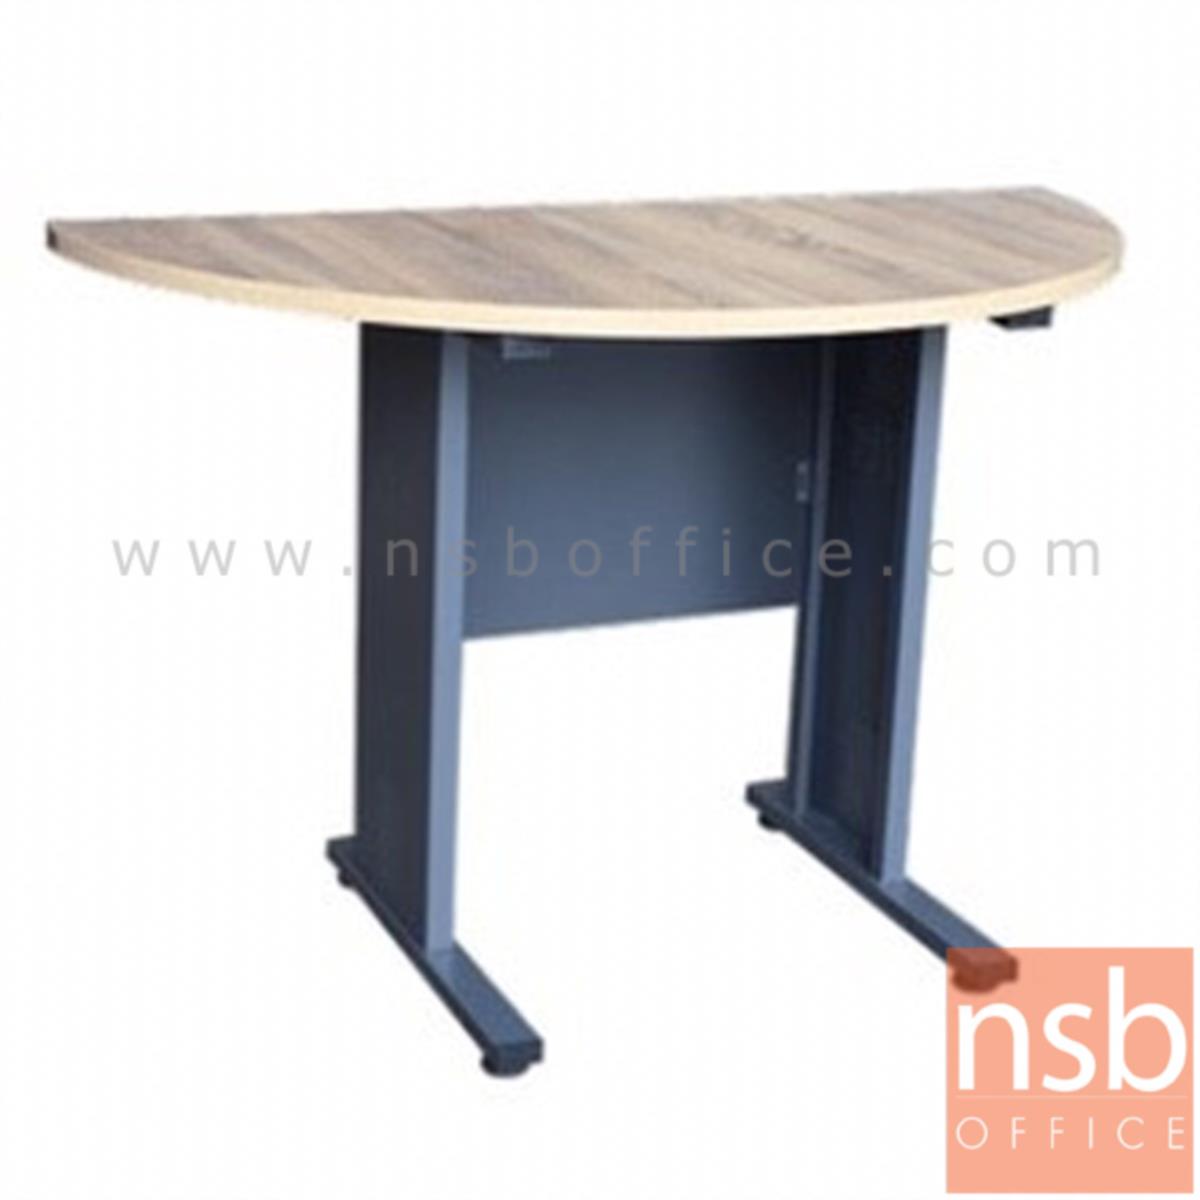 A10A071:โต๊ะเข้ามุม รุ่น Prodigy (โพรดิจี้) ขนาด 120W cm. ขาเหล็ก